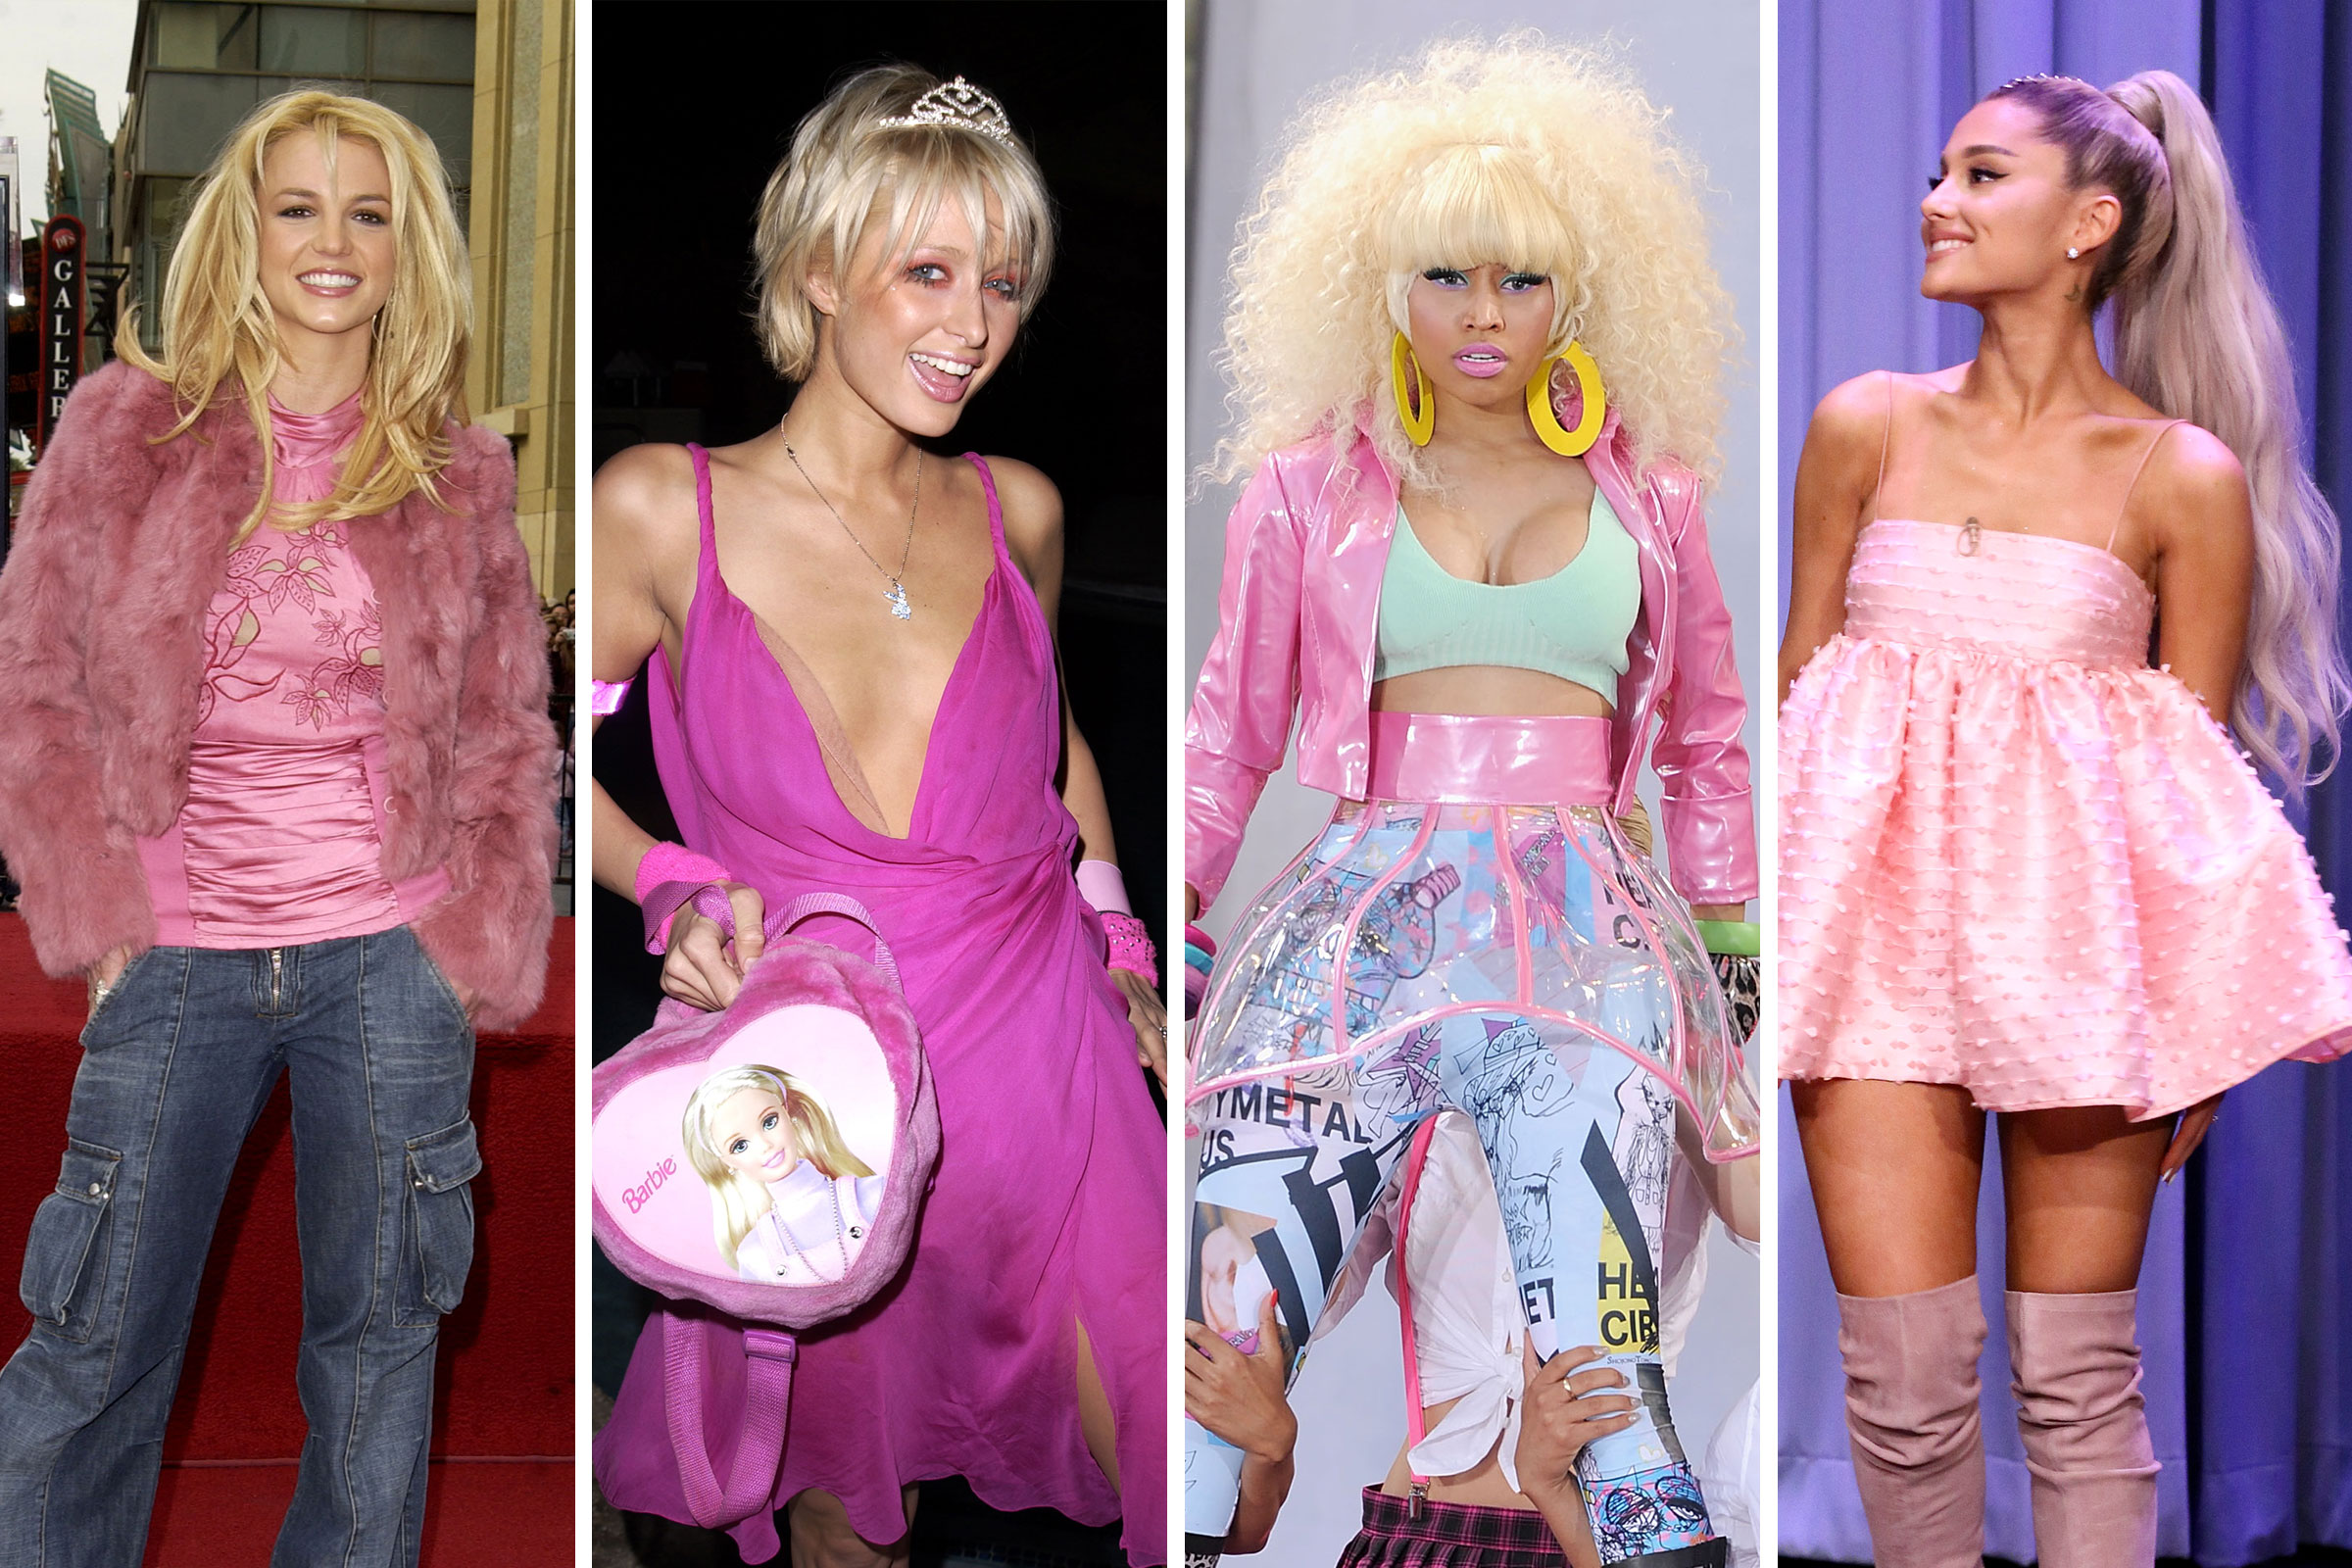 Barbiecore: 20 celebrities wearing the hot pink trend